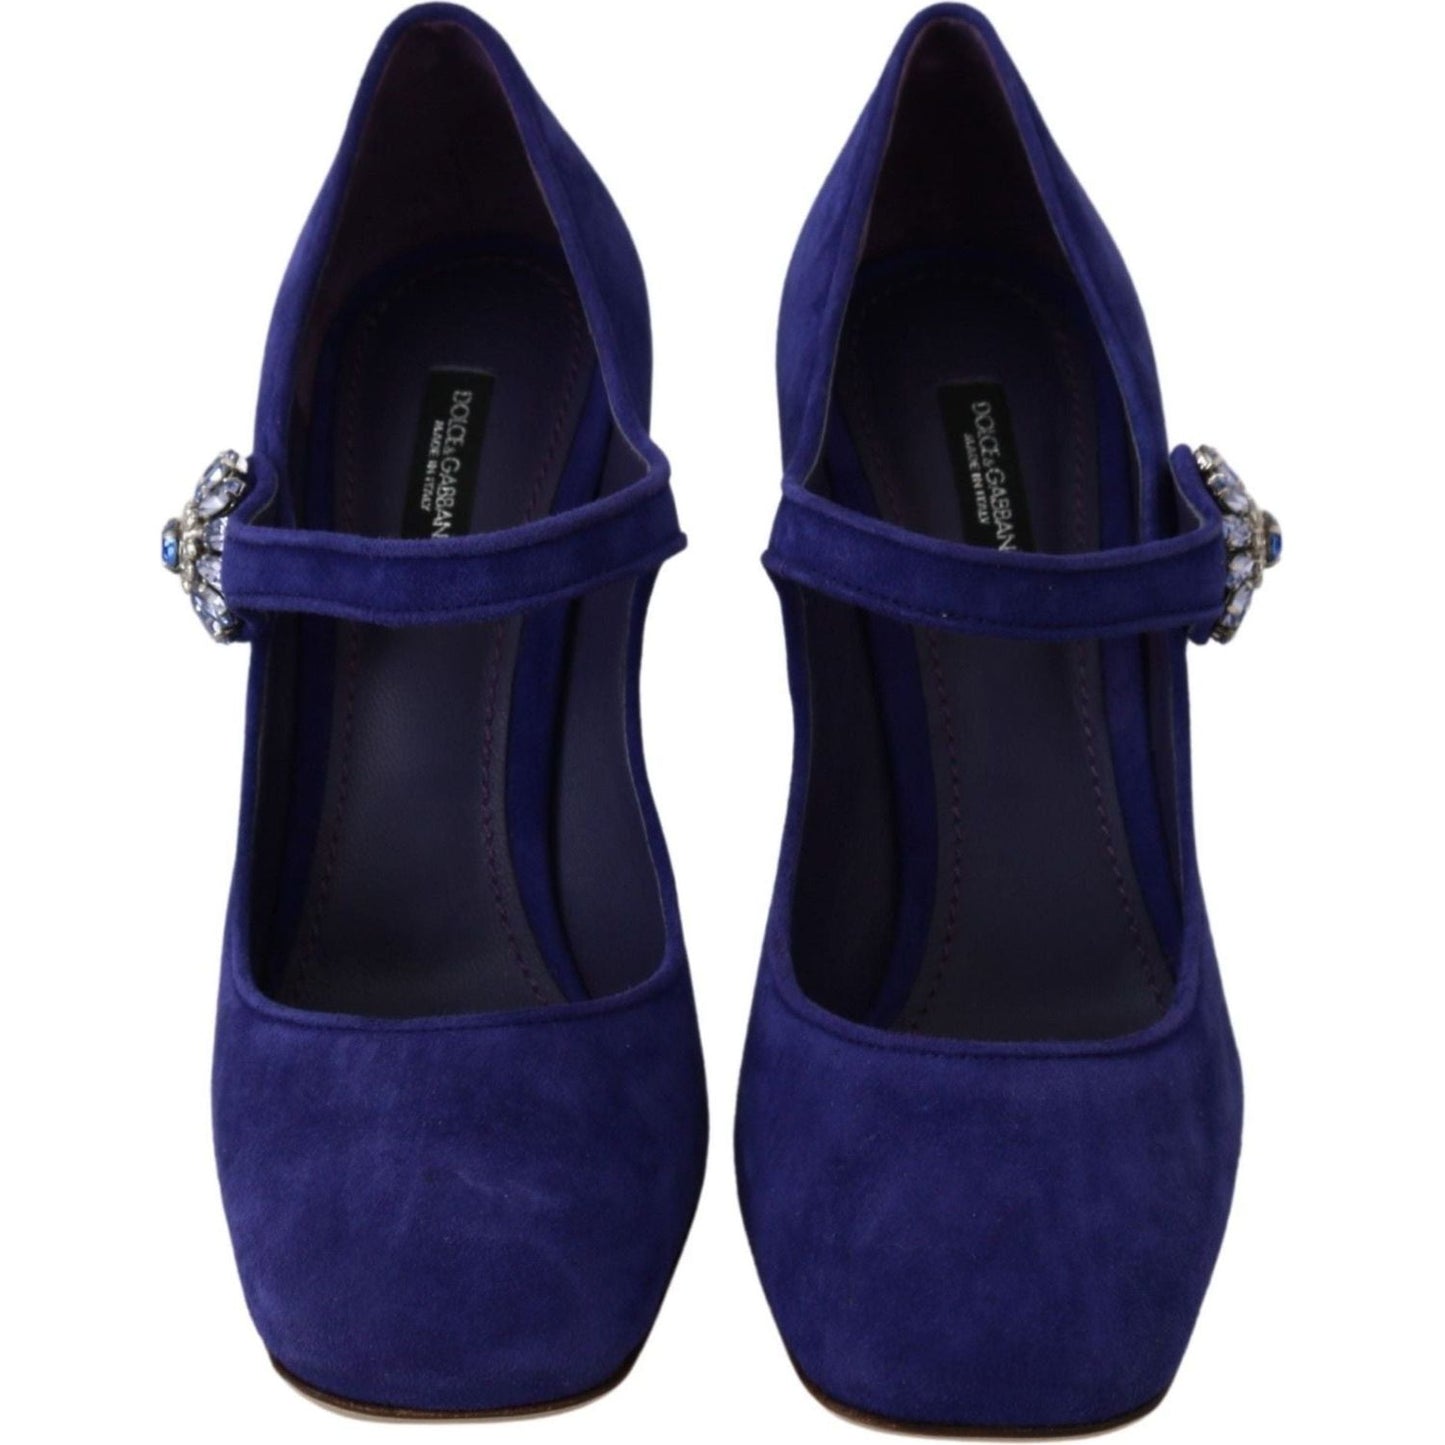 Dolce & Gabbana Elegant Purple Suede Mary Janes Pumps purple-suede-crystal-pumps-heels-shoes